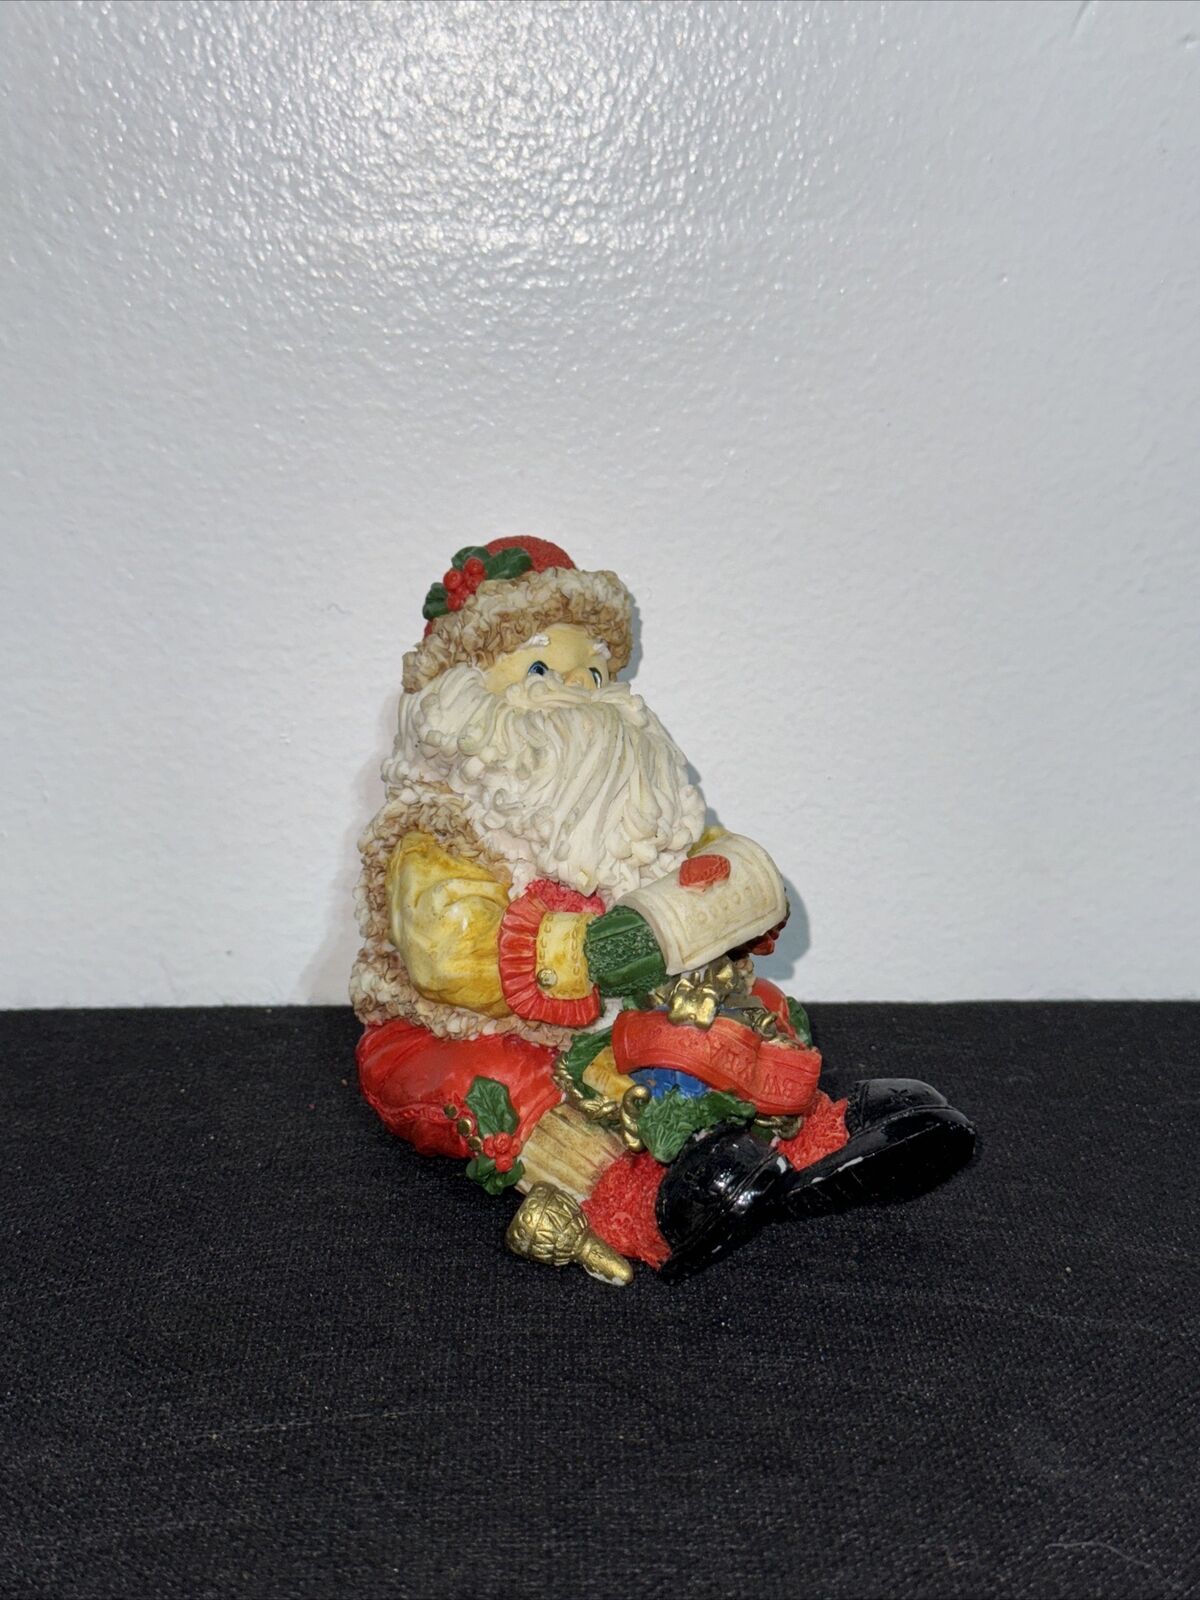 Vintage Santa Claus Resin Figurine 4 Inch Christmas Holiday Decoration Gift List